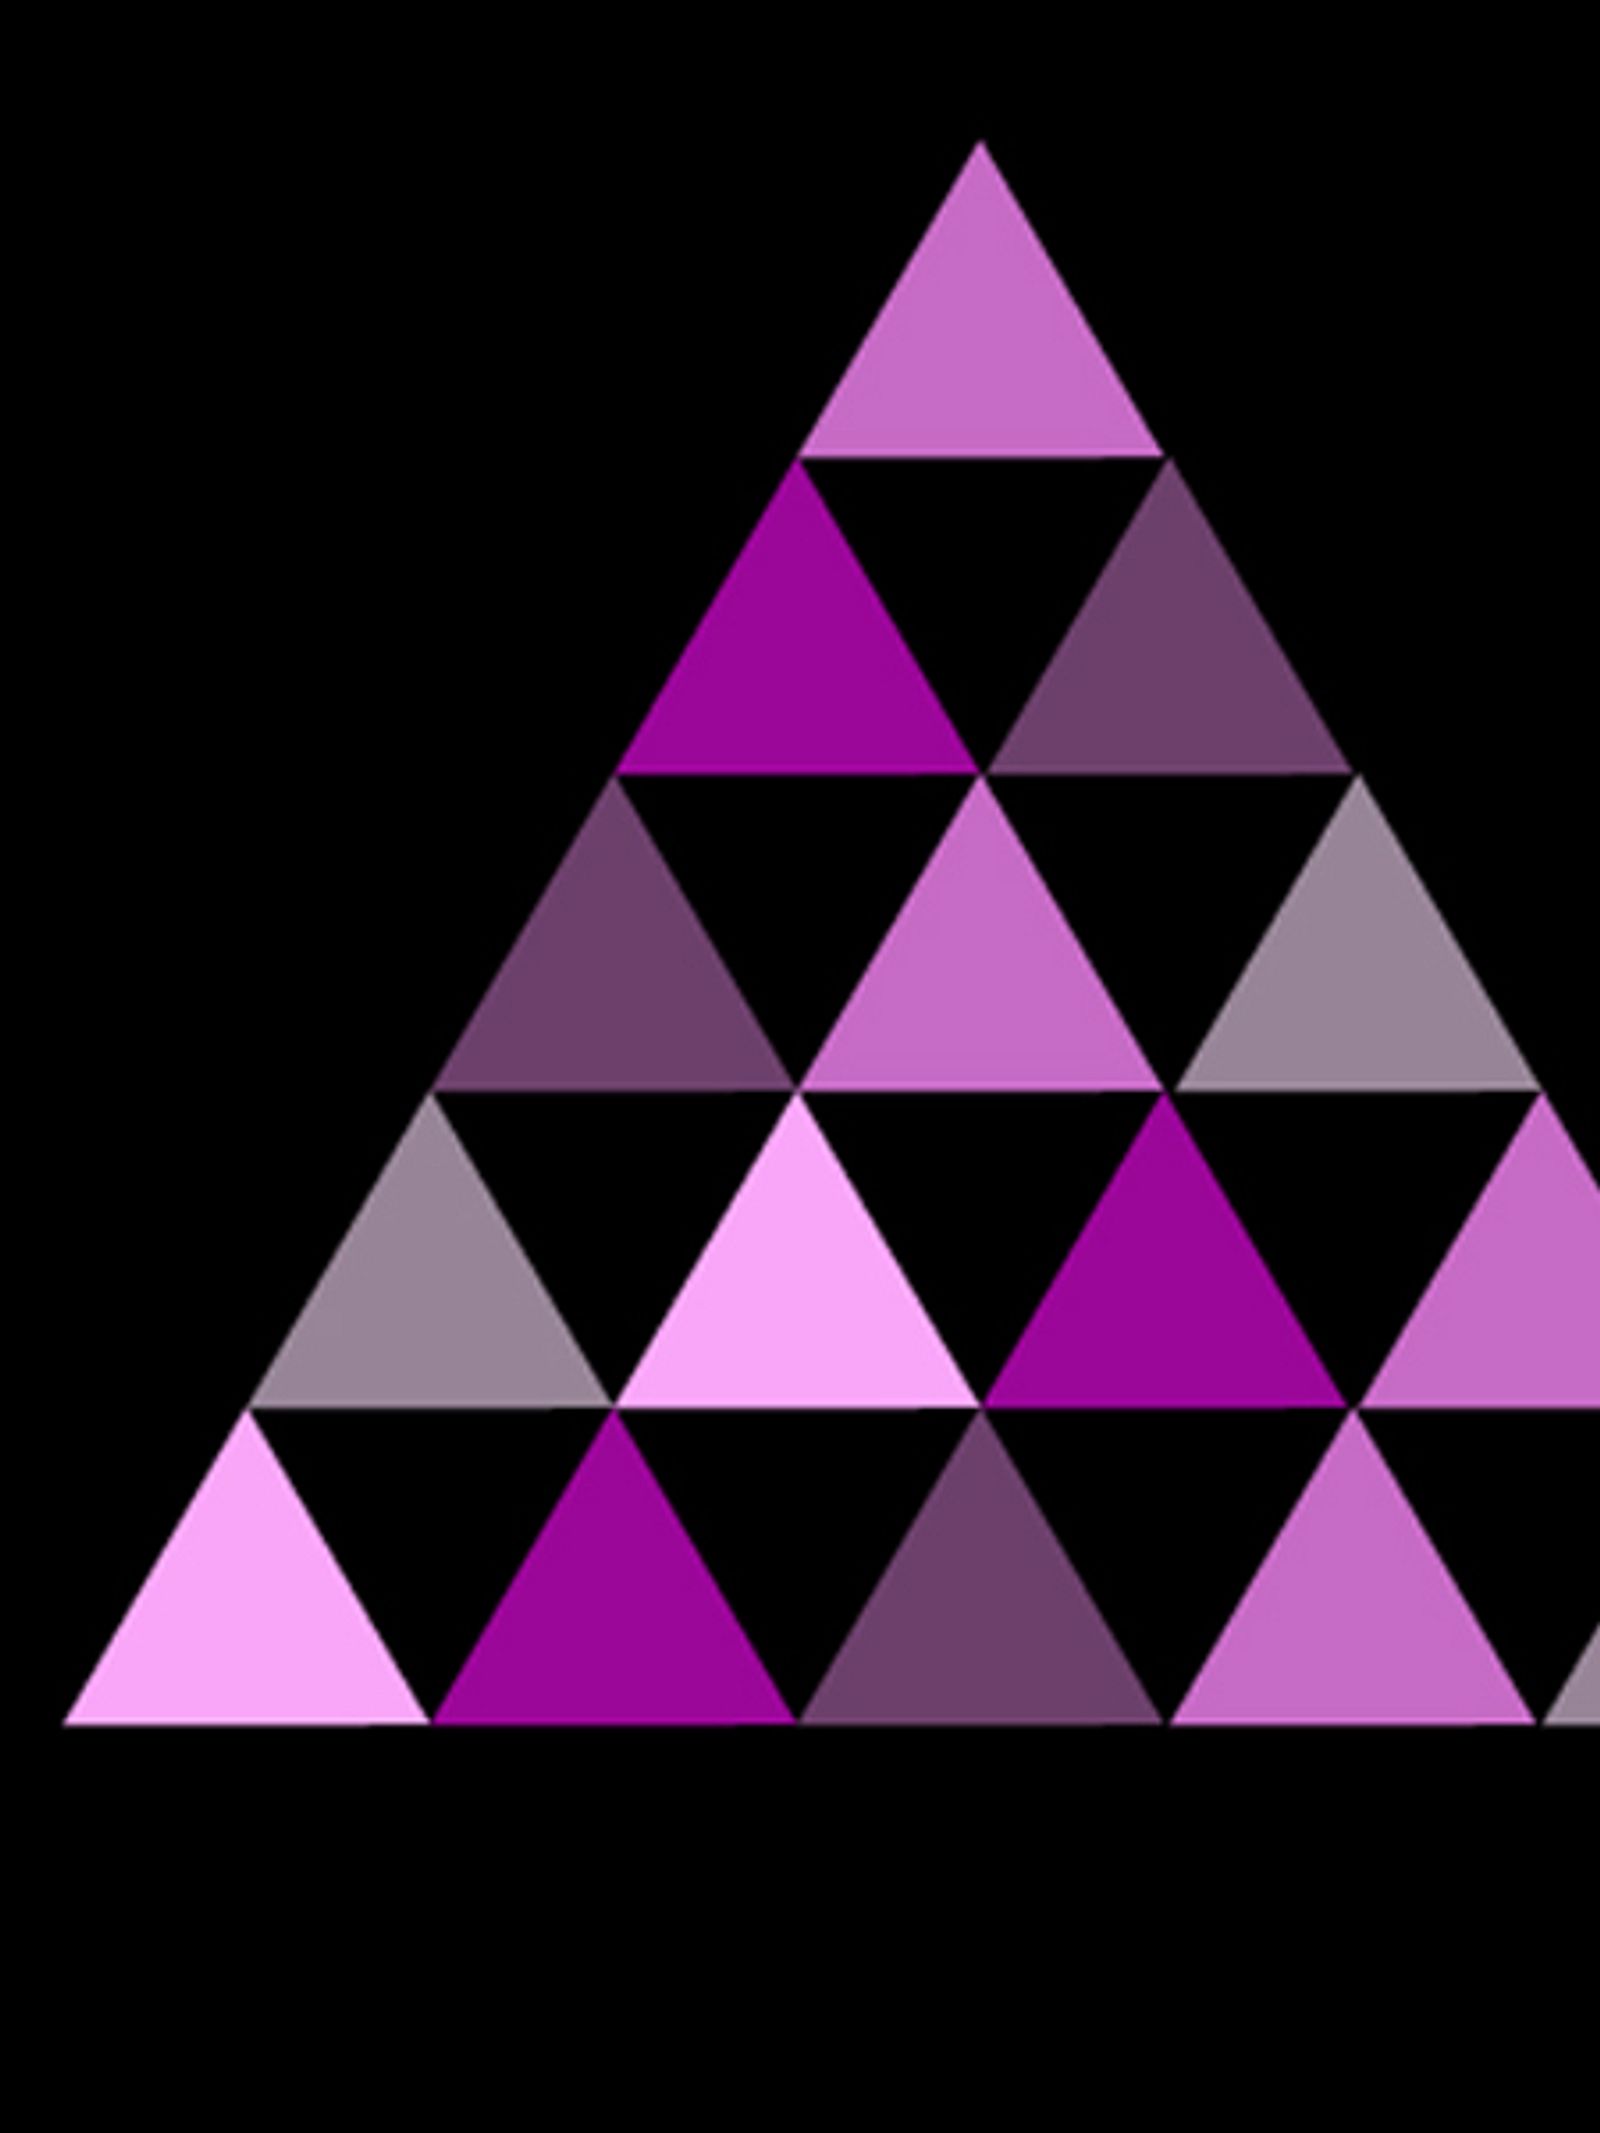 39+ Sprueche wunderweib , DreiecksRätsel Wie viele Dreiecke siehst du? Wunderweib